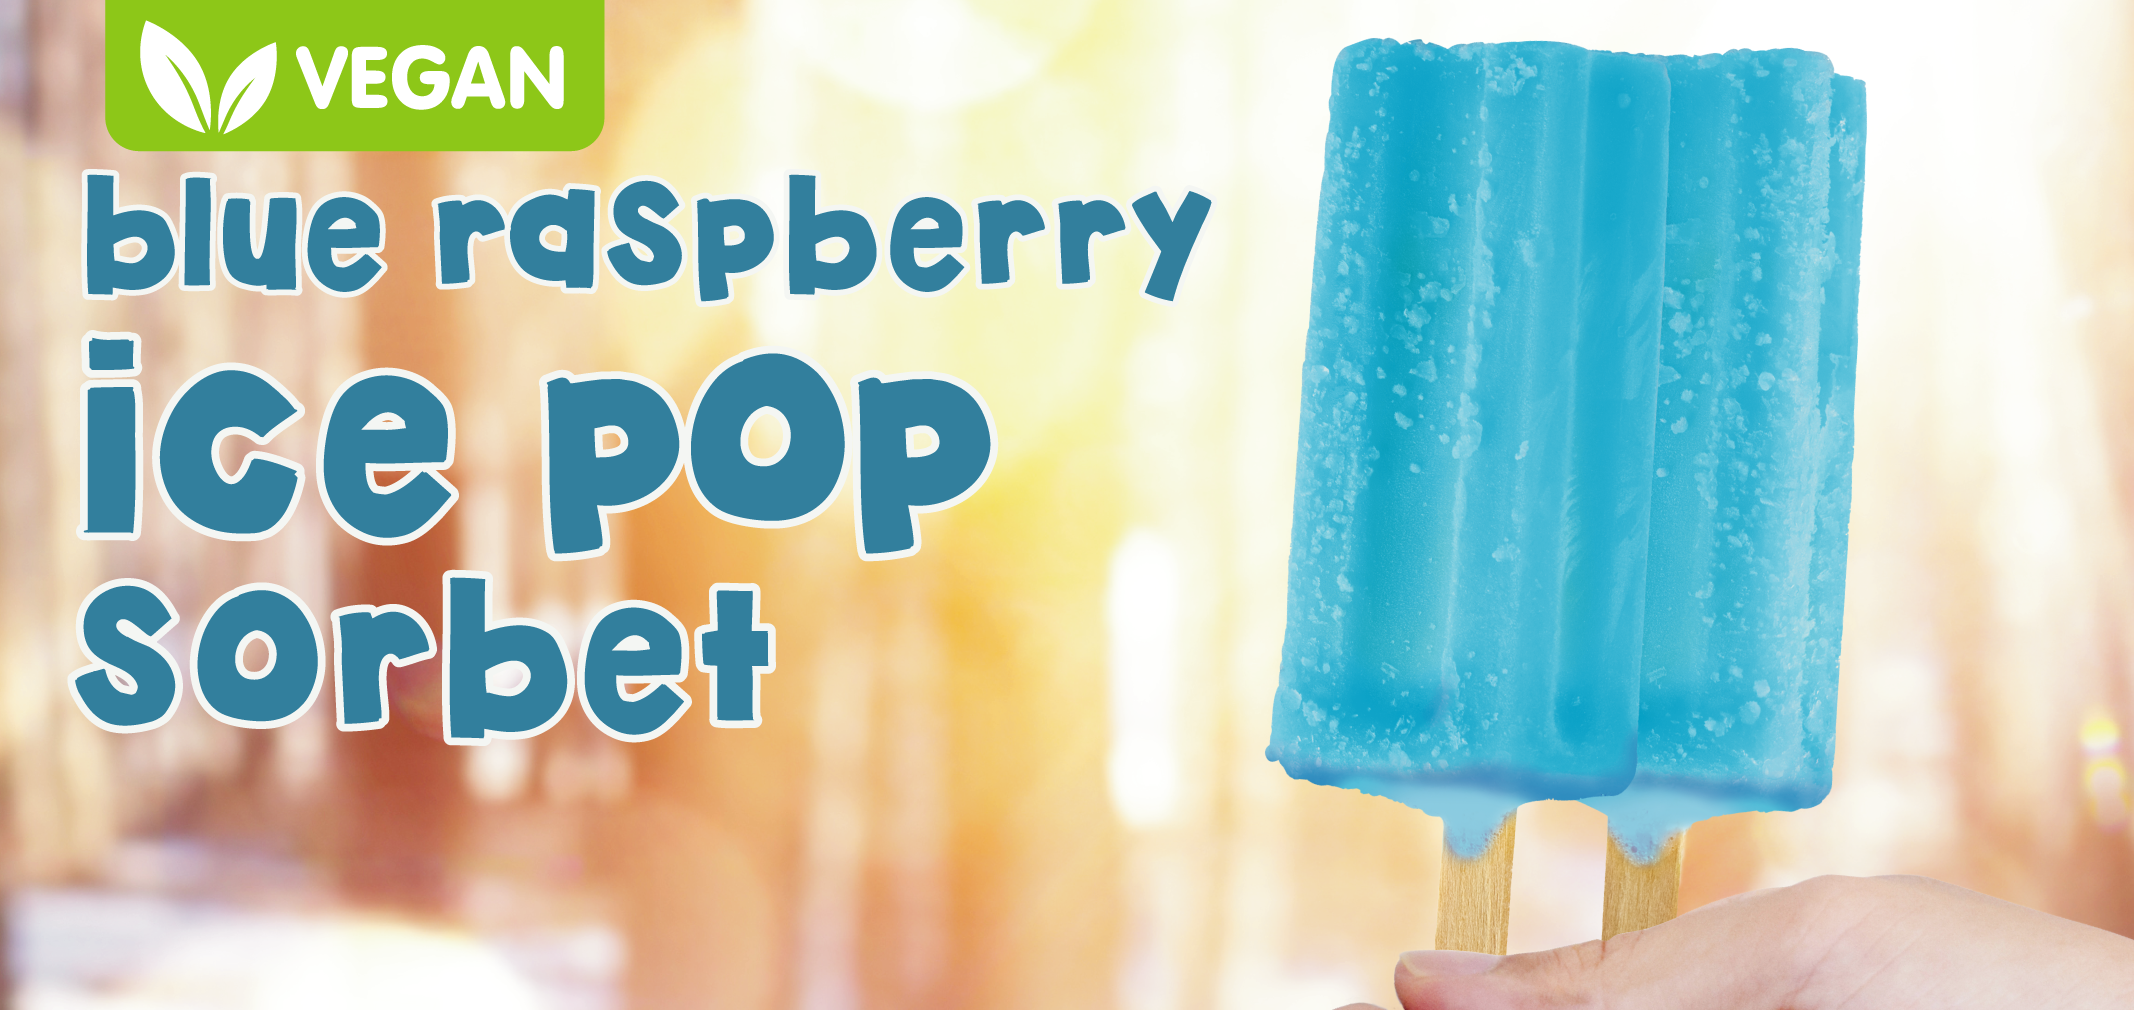 vegan blue raspberry ice pop sorbet label image